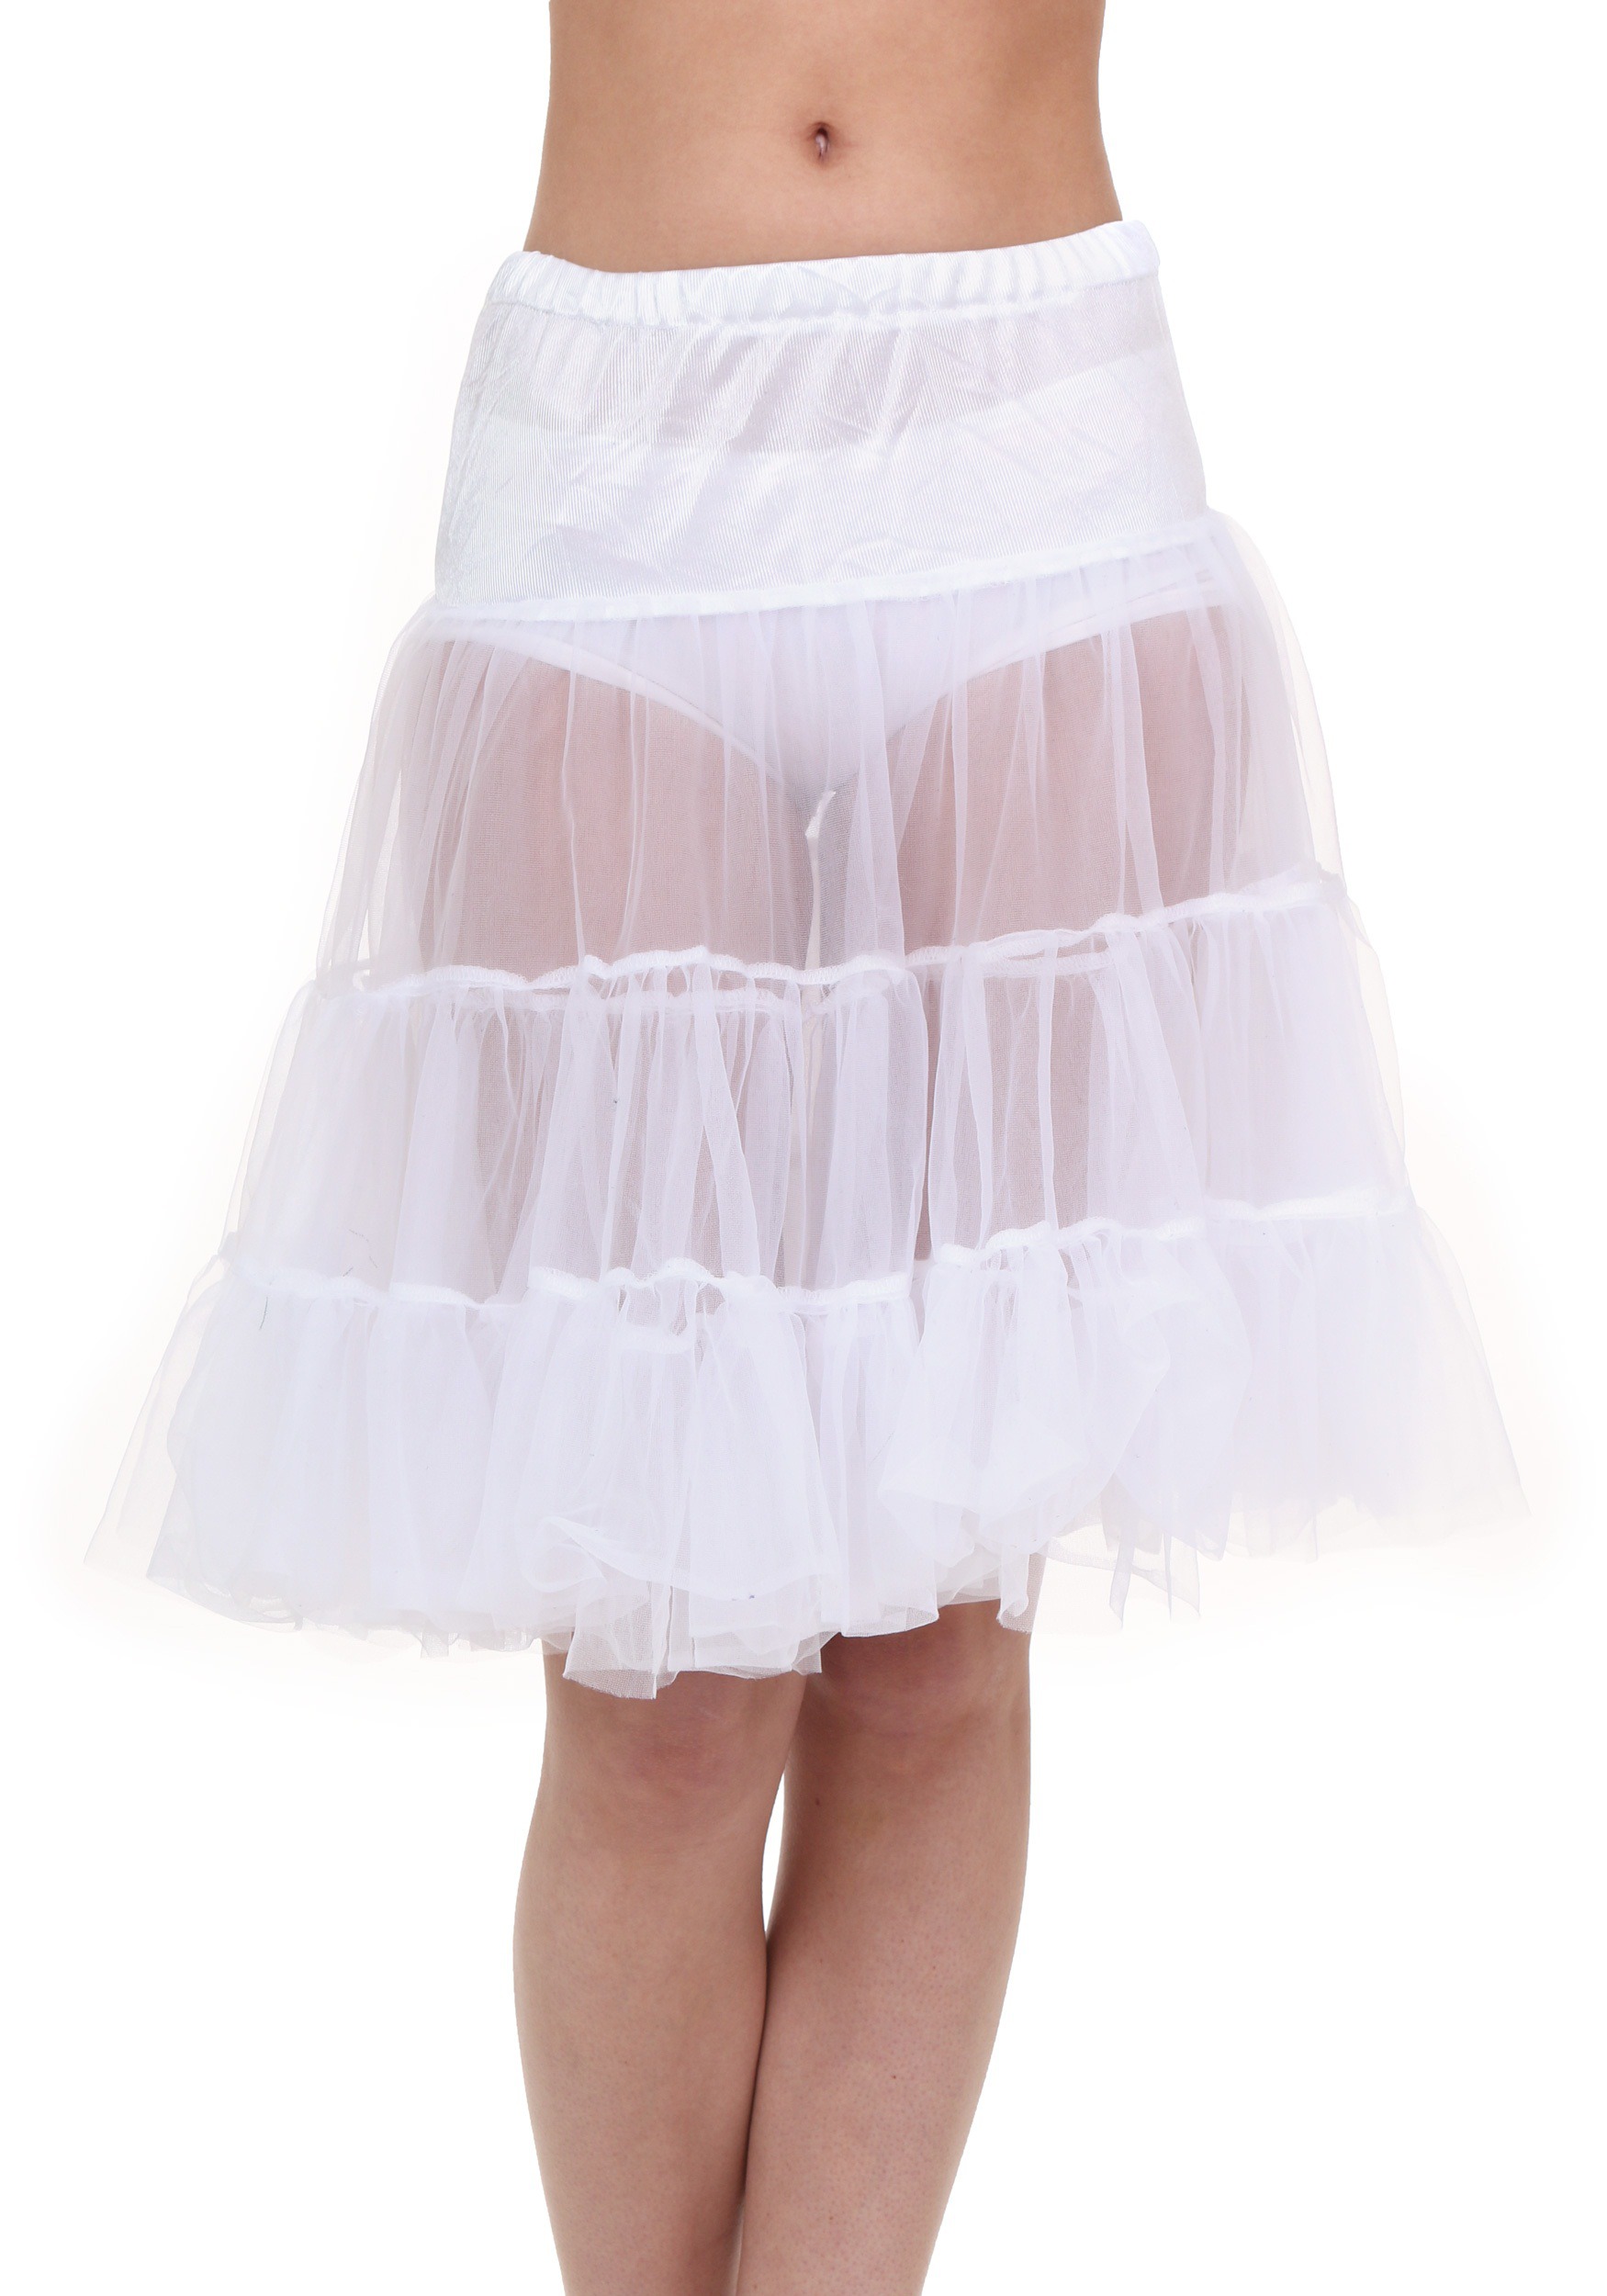 Plus Size Knee Length Petticoat Online